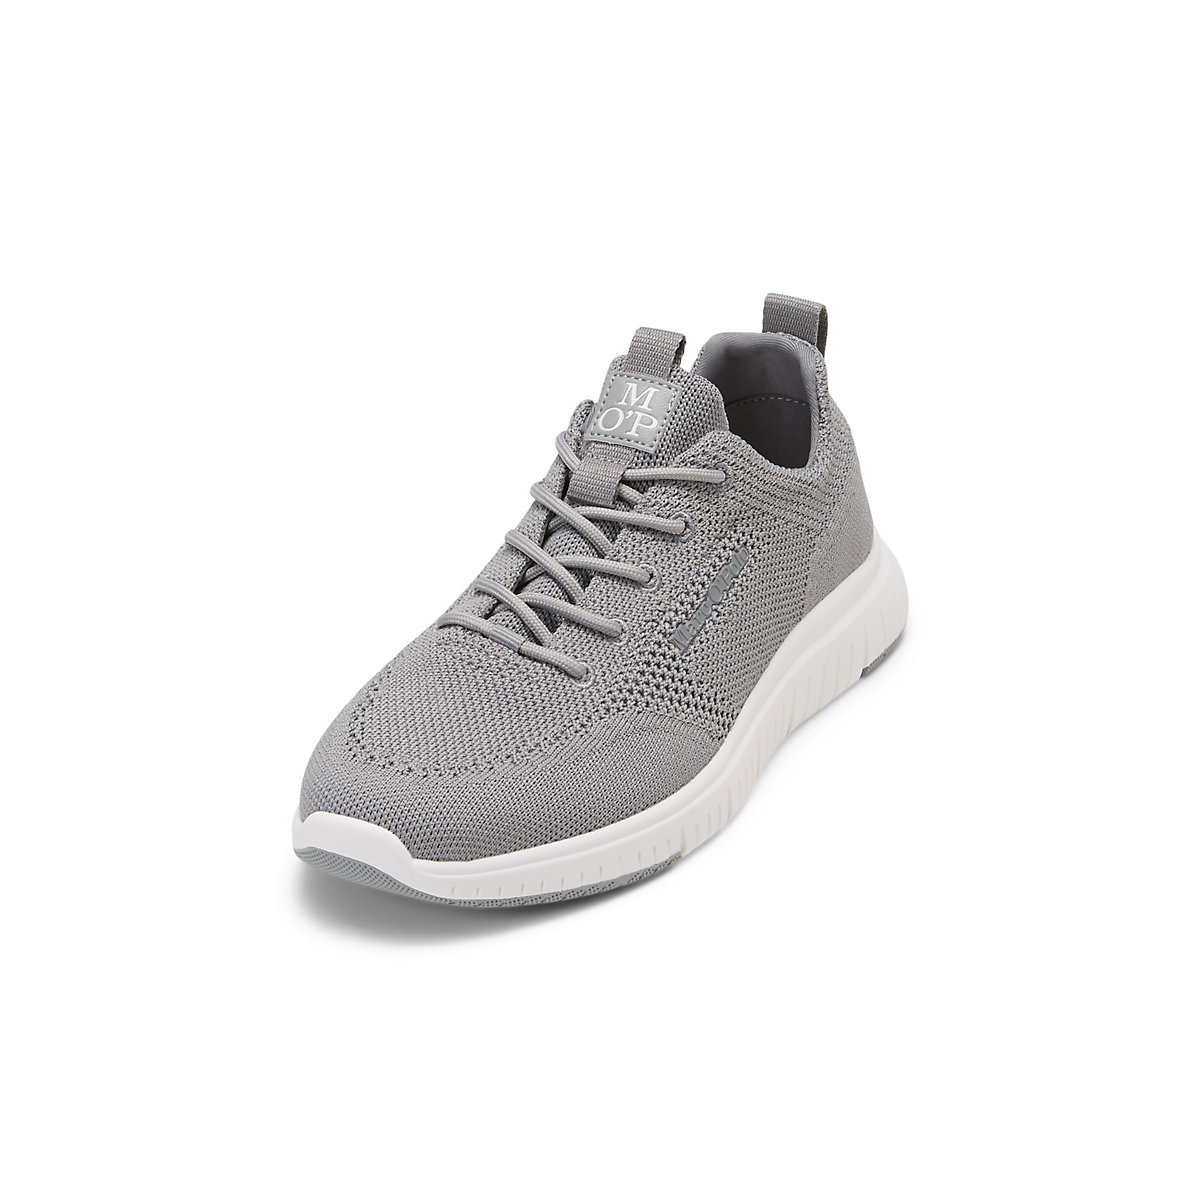 Marc O'Polo Strick-Sneaker mit herausnehmbarer Innensohle Sneakers Low grau